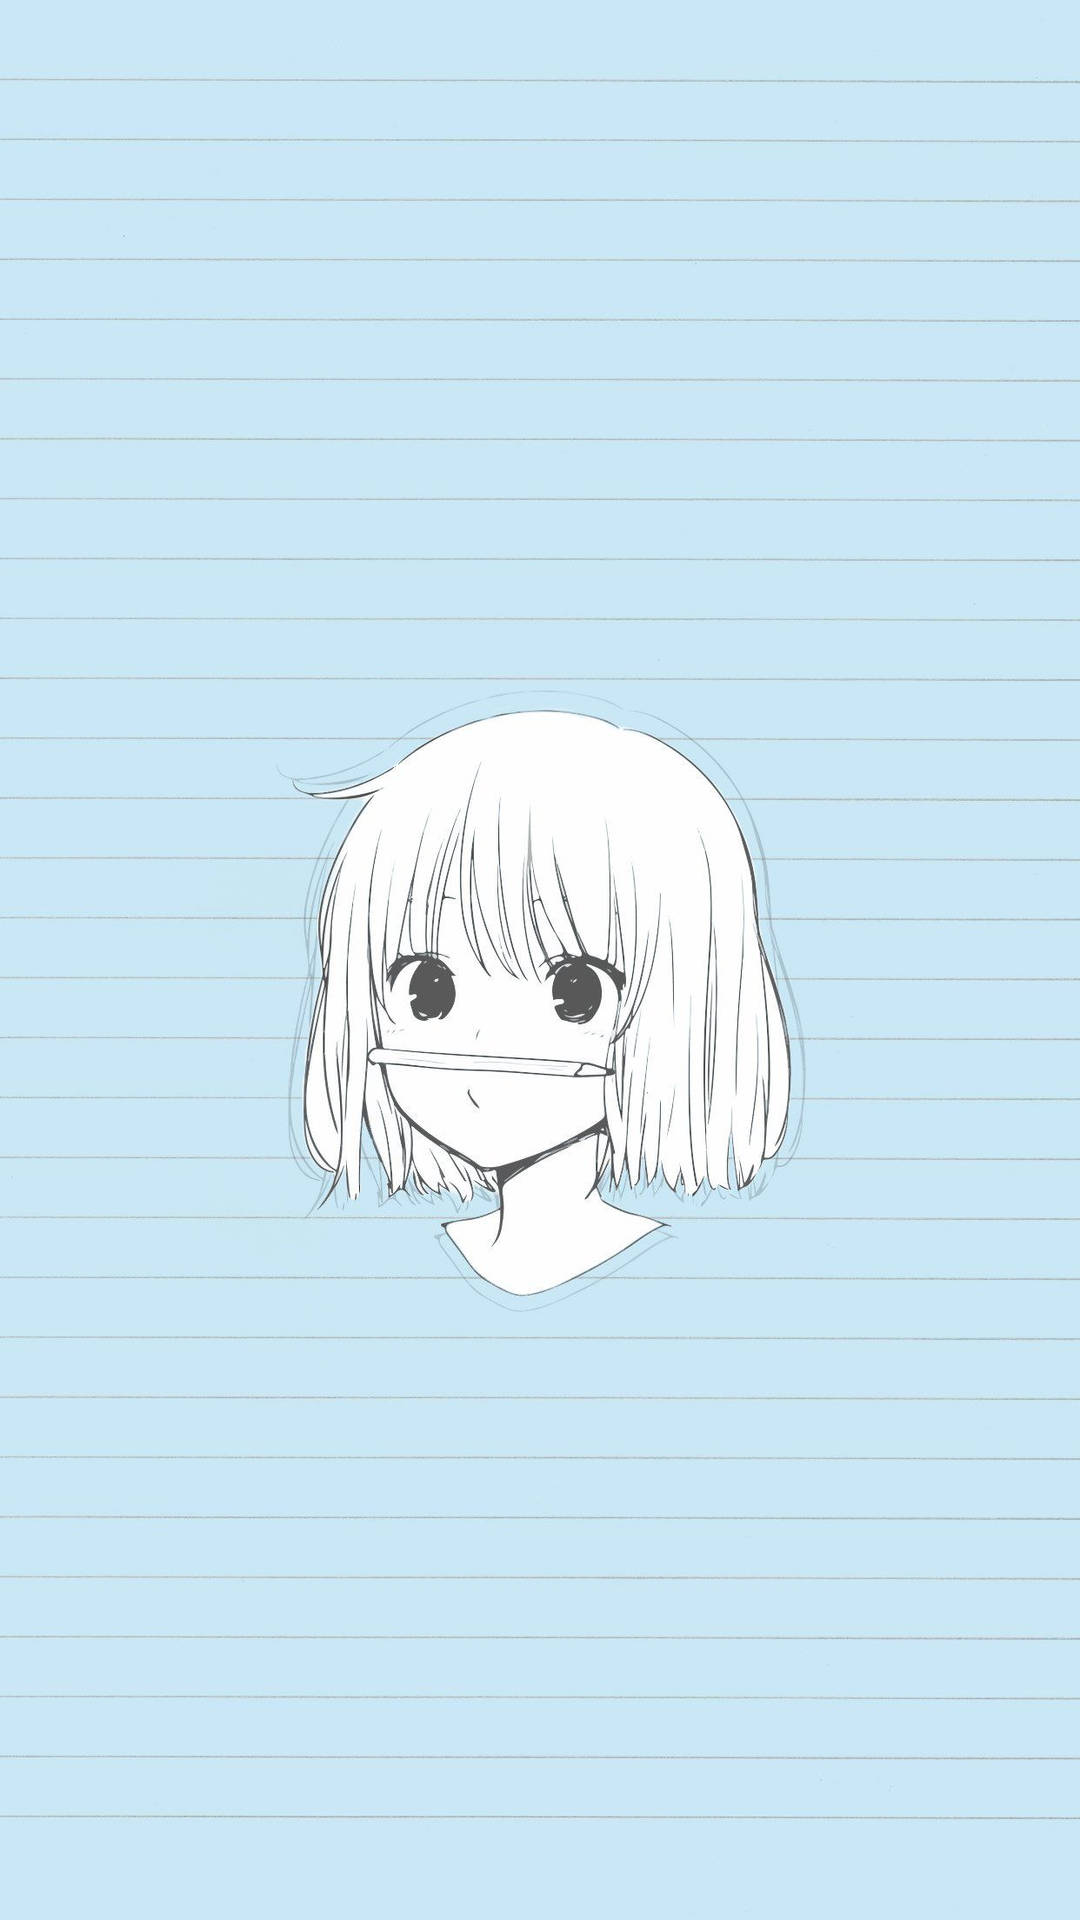 Hd Anime Phone Sketch Of Girl